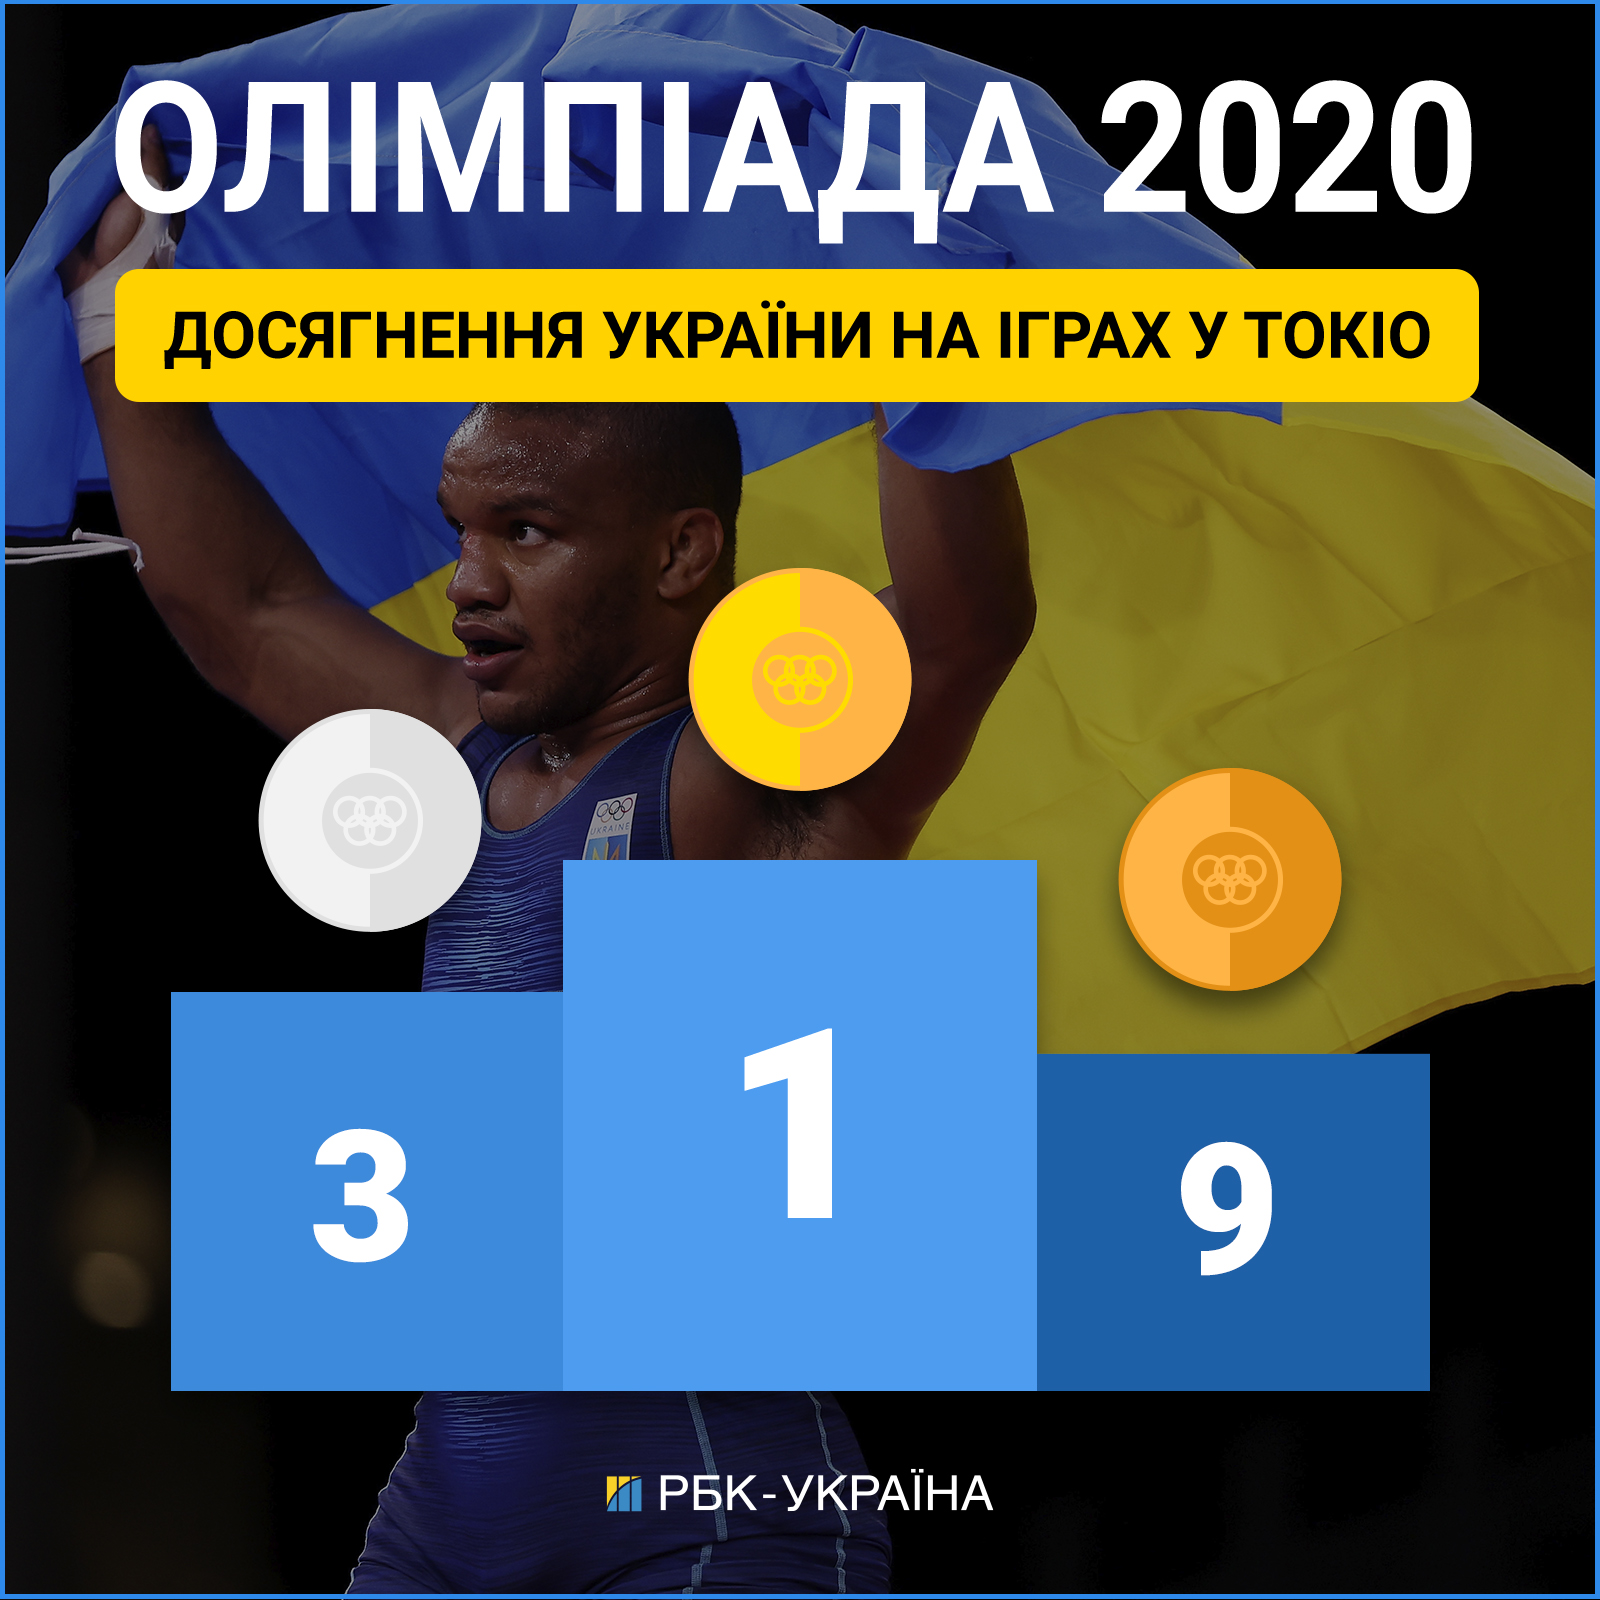 ОІ - 2020-медальний залік, Хижняк у фіналі, Підсумки дня 5 ...